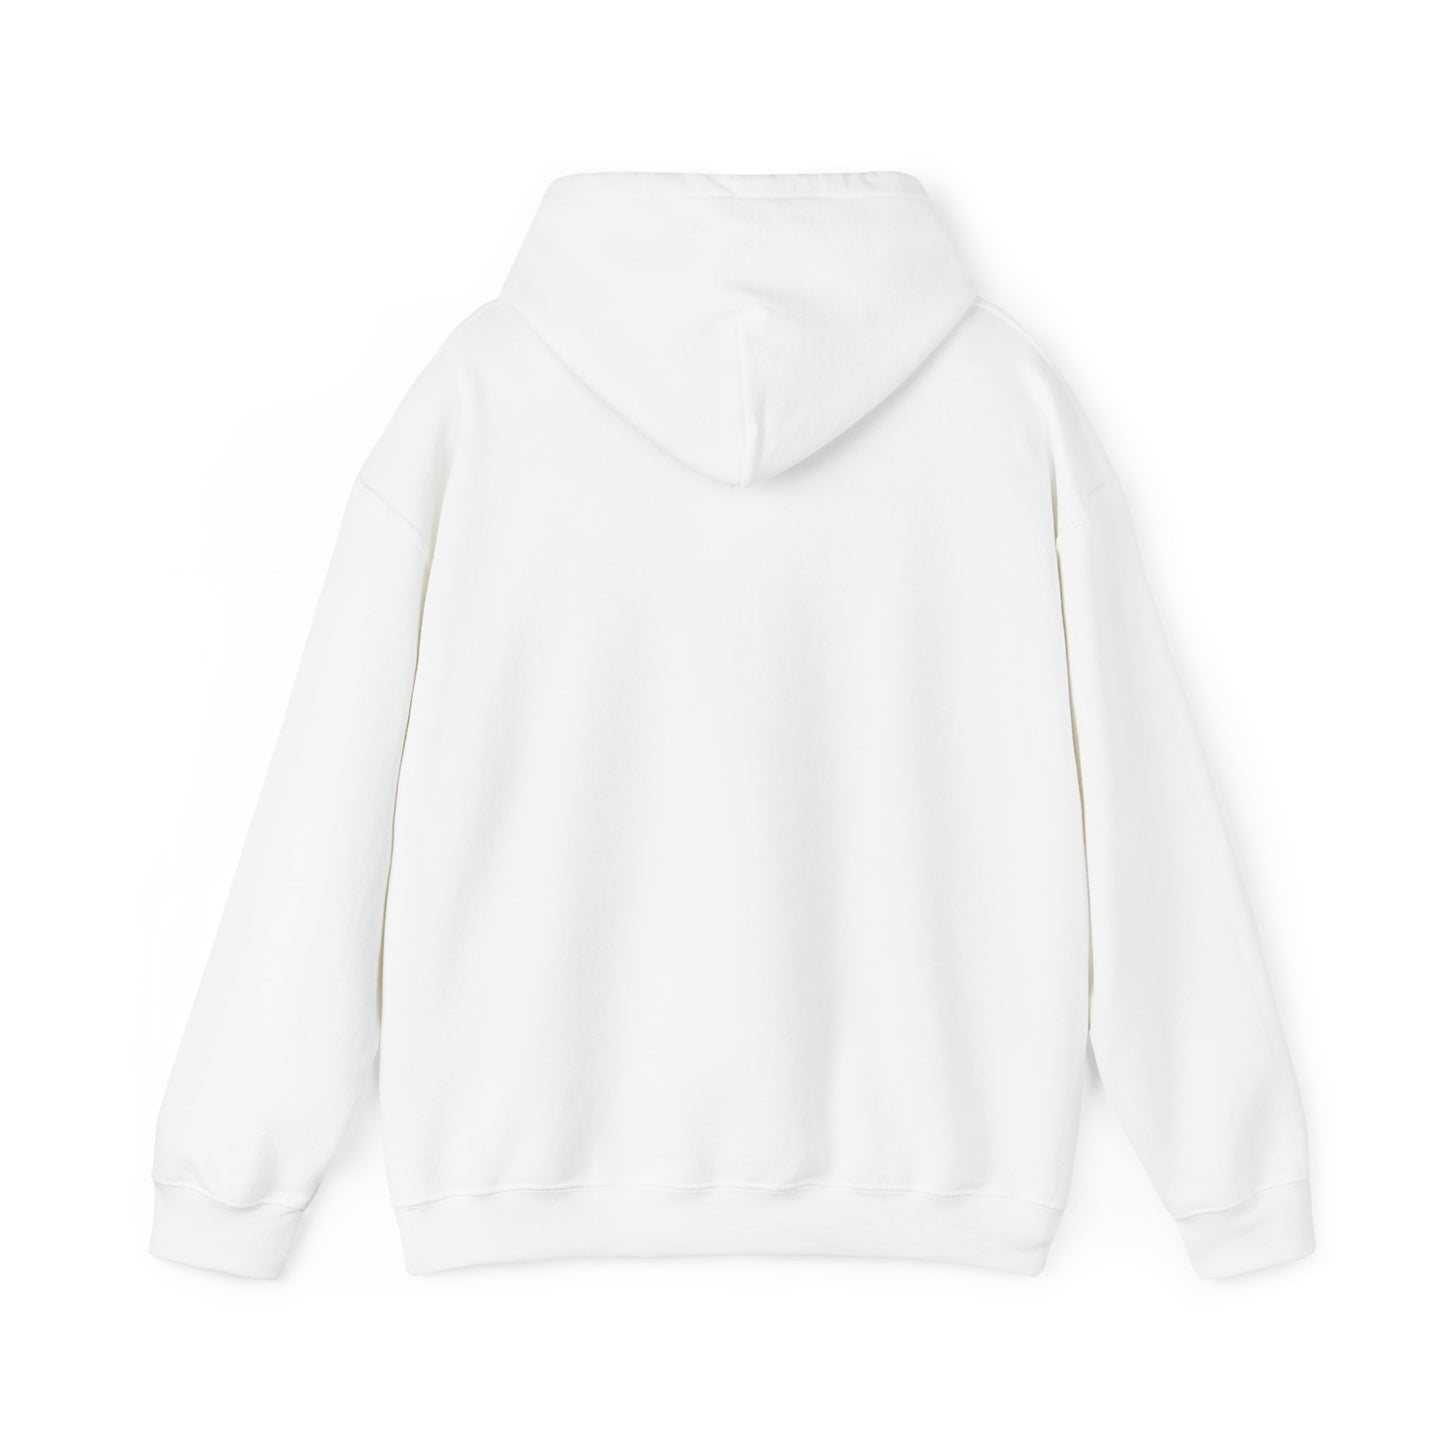 "ADSN1.com" Unisex Heavy Blend™ Hooded Sweatshirt